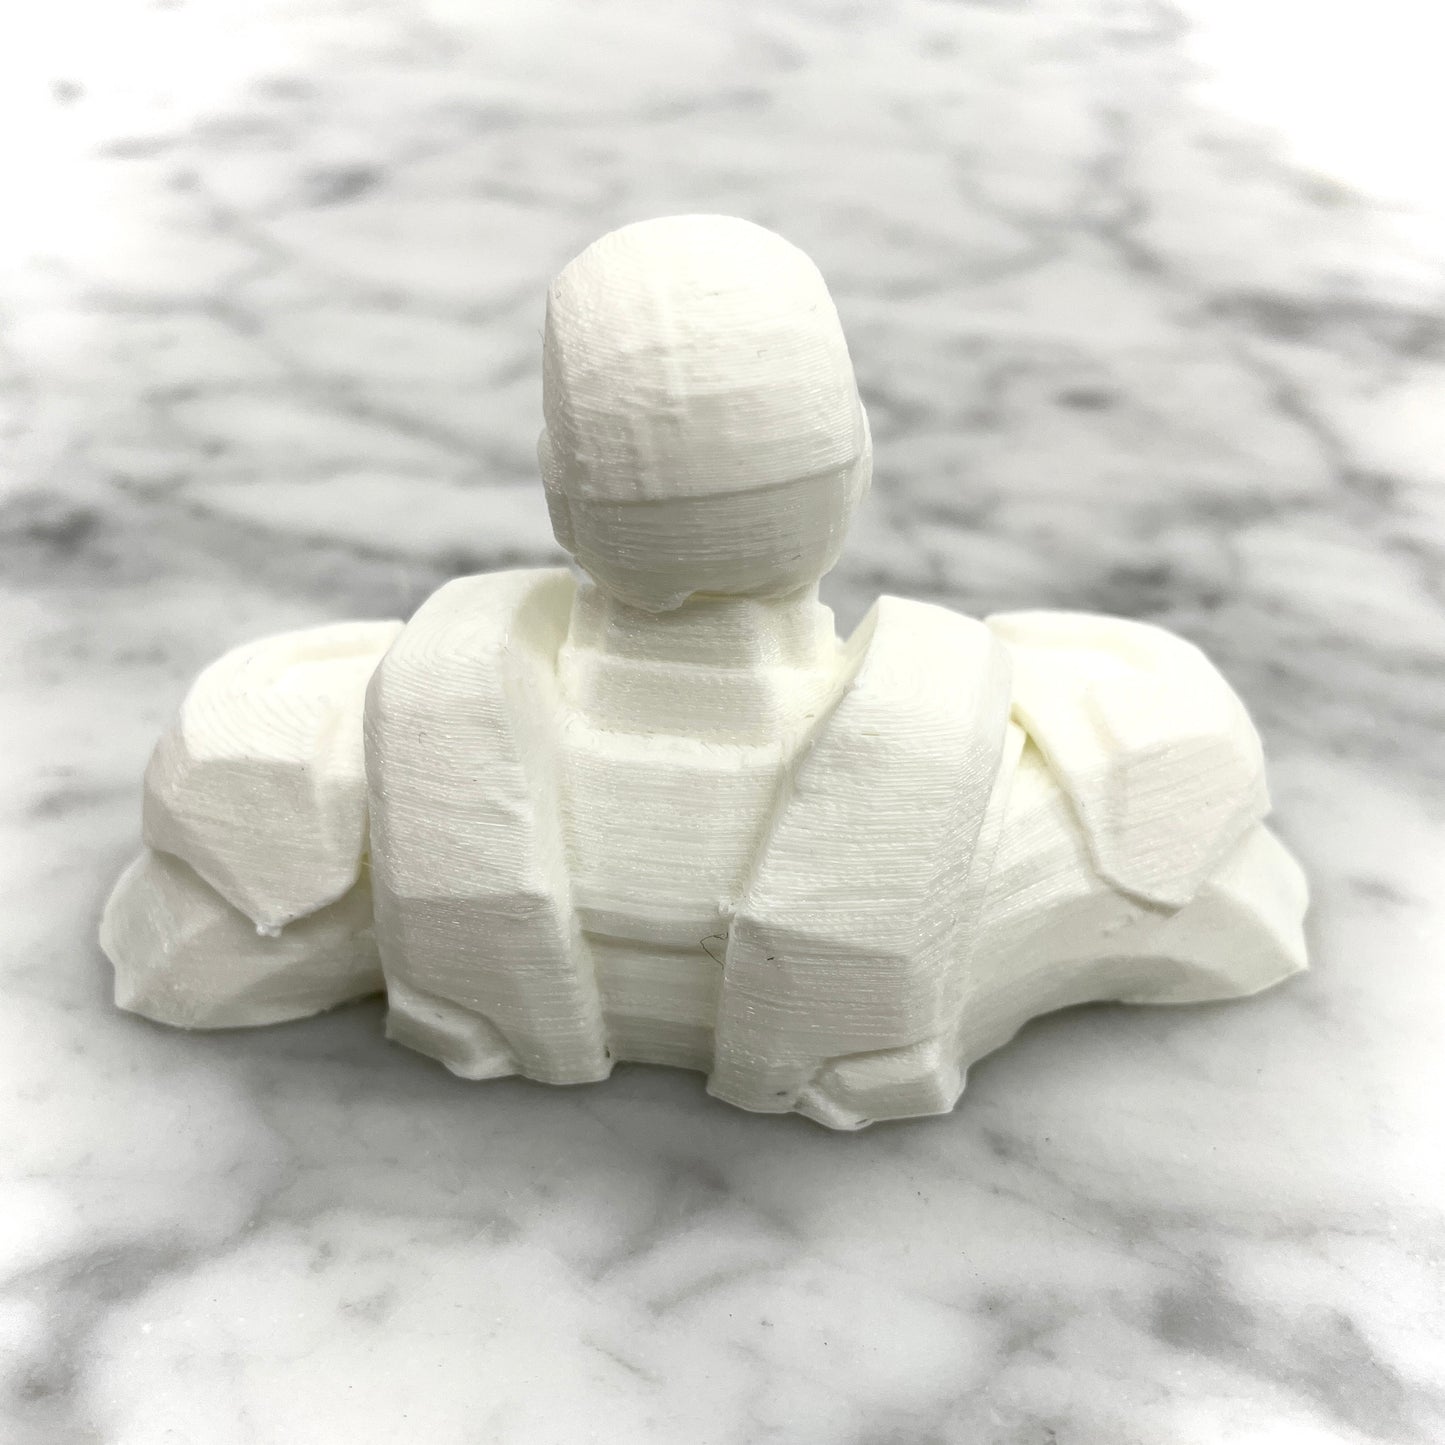 3D Printed Ironman Desk Buddy